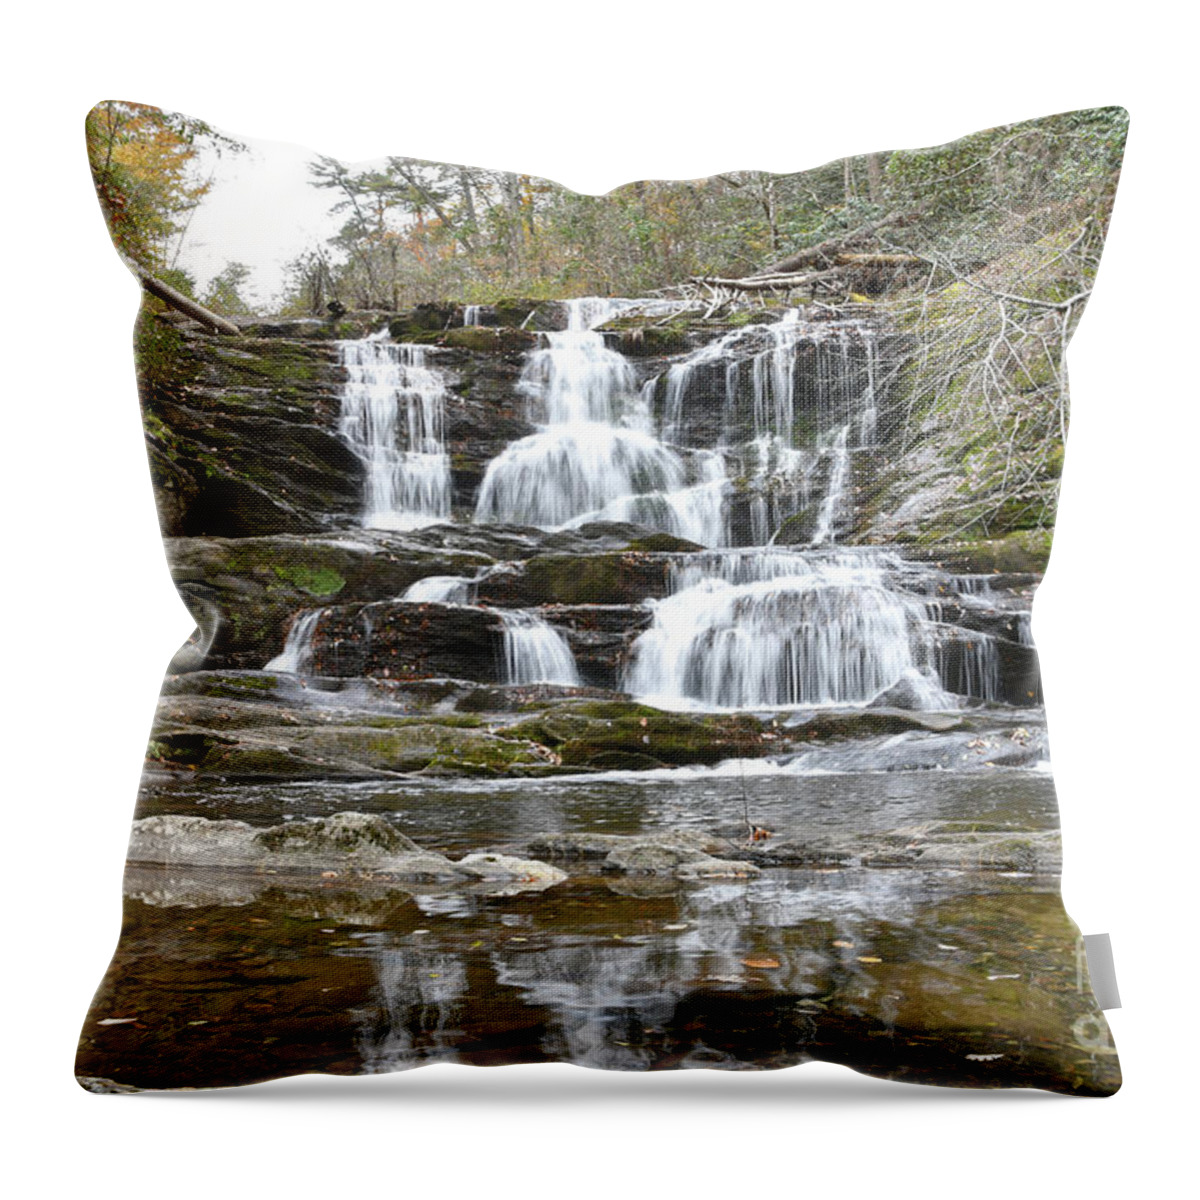 Conasauga Falls Throw Pillow featuring the photograph Conasauga Falls 5 by Phil Perkins